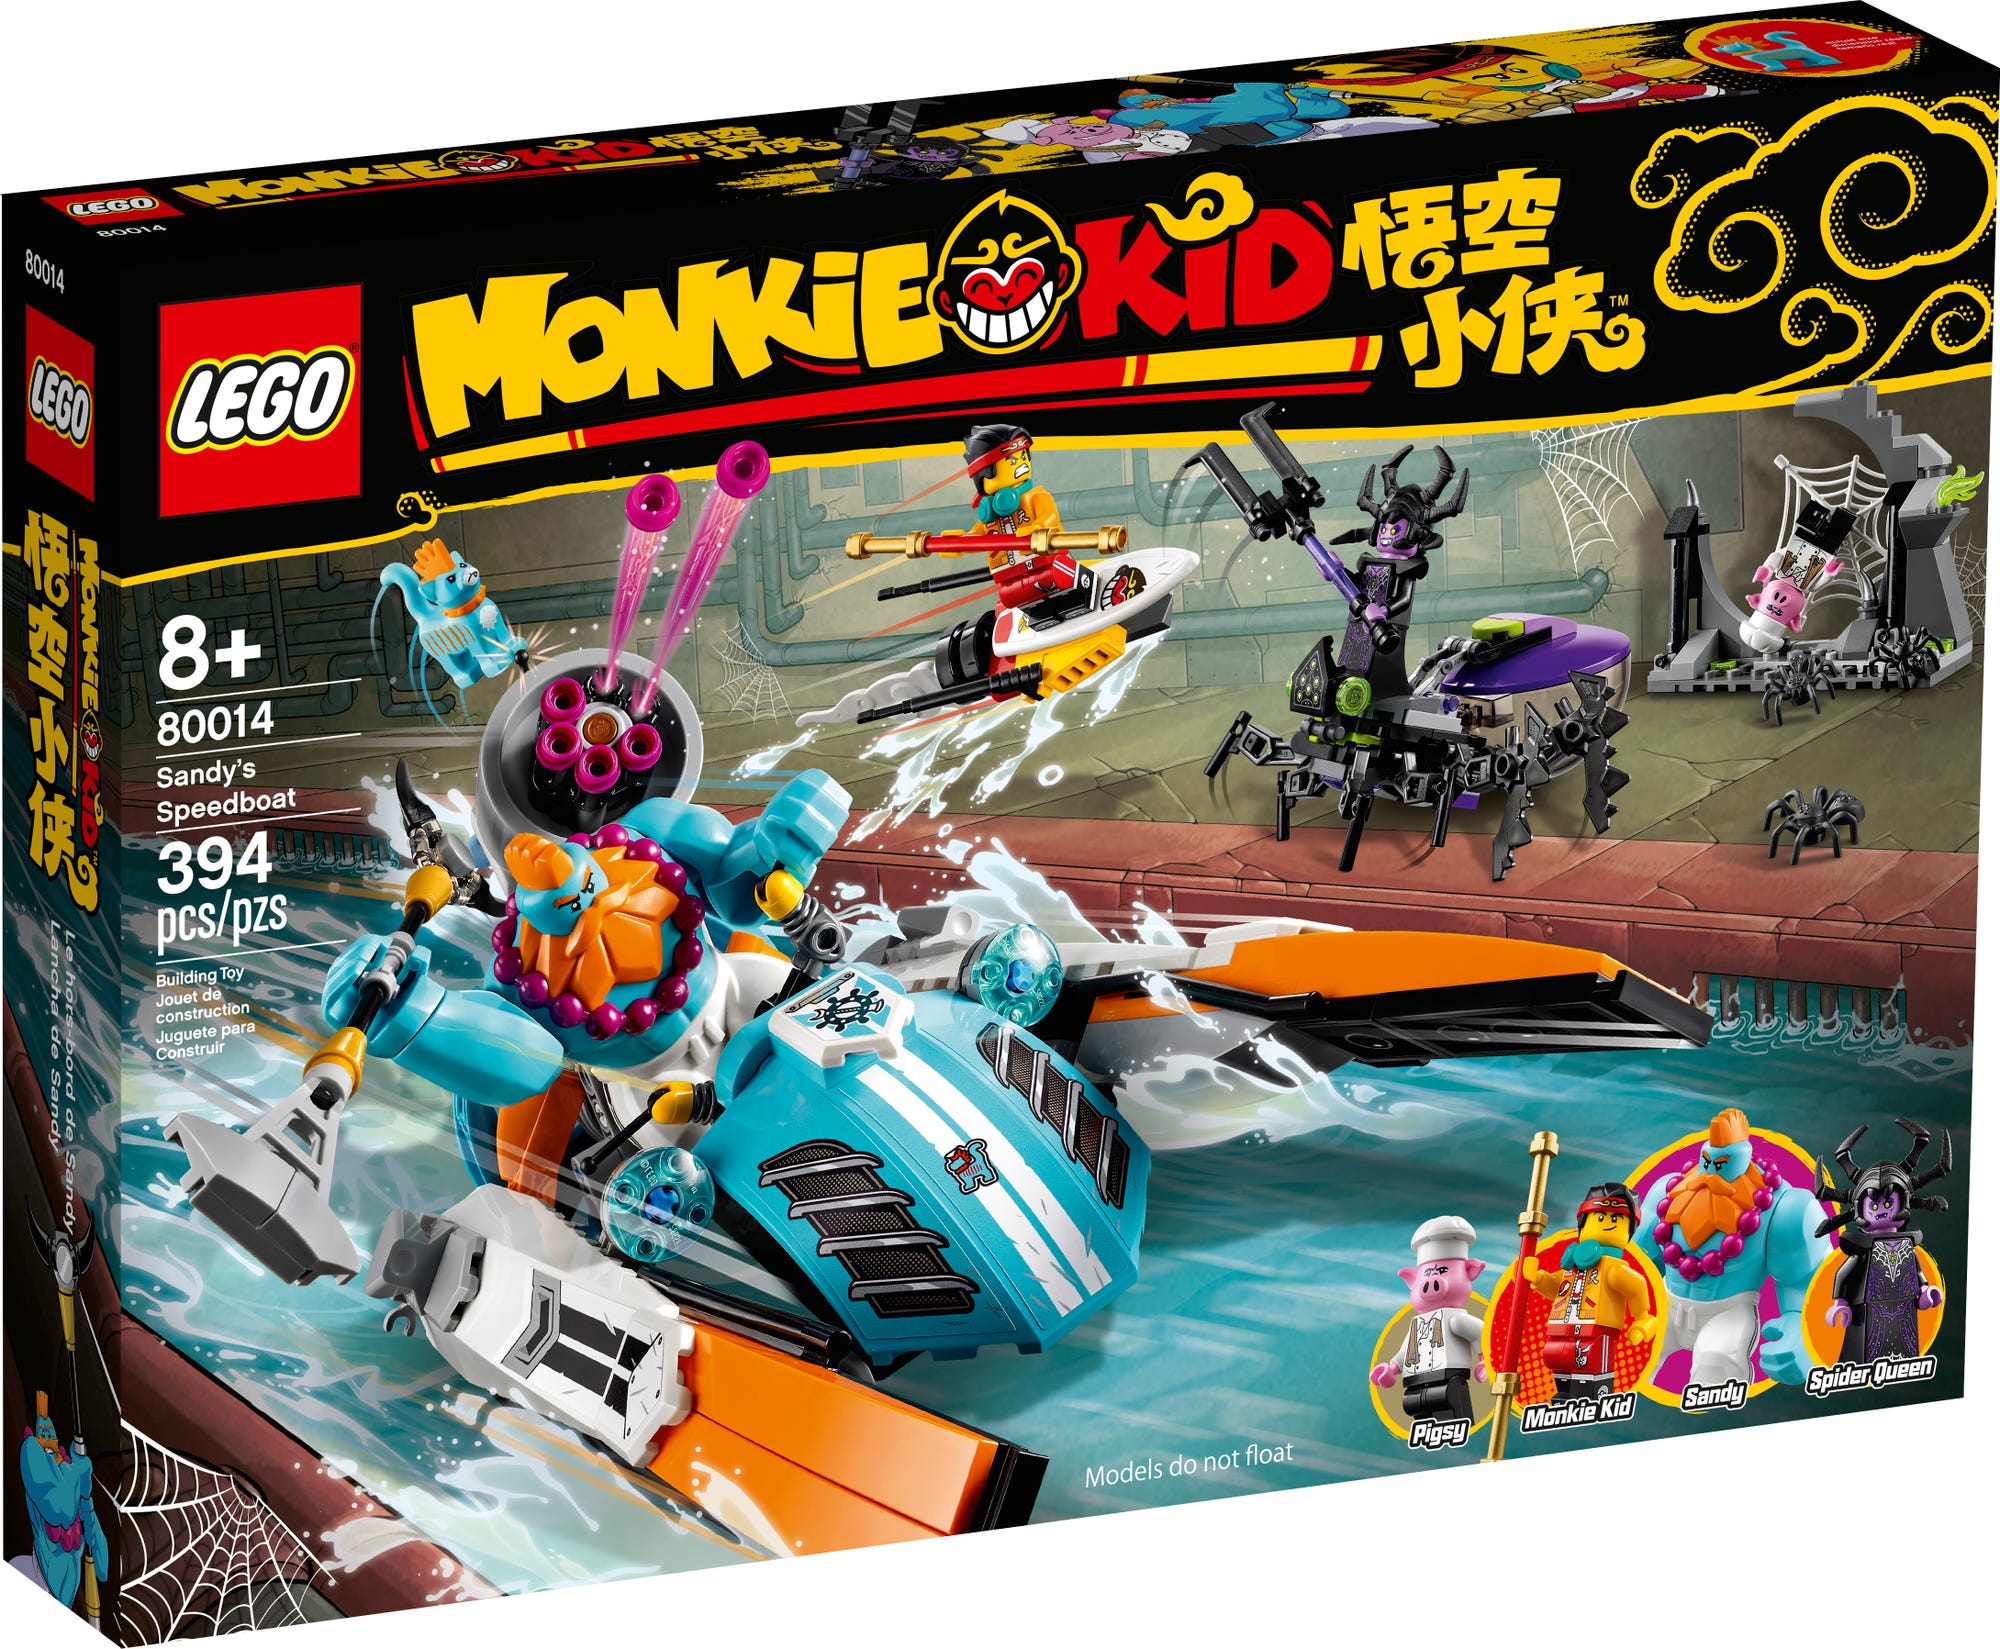 LEGO 80014 Monkie Kid Sandy S Speedboat 2